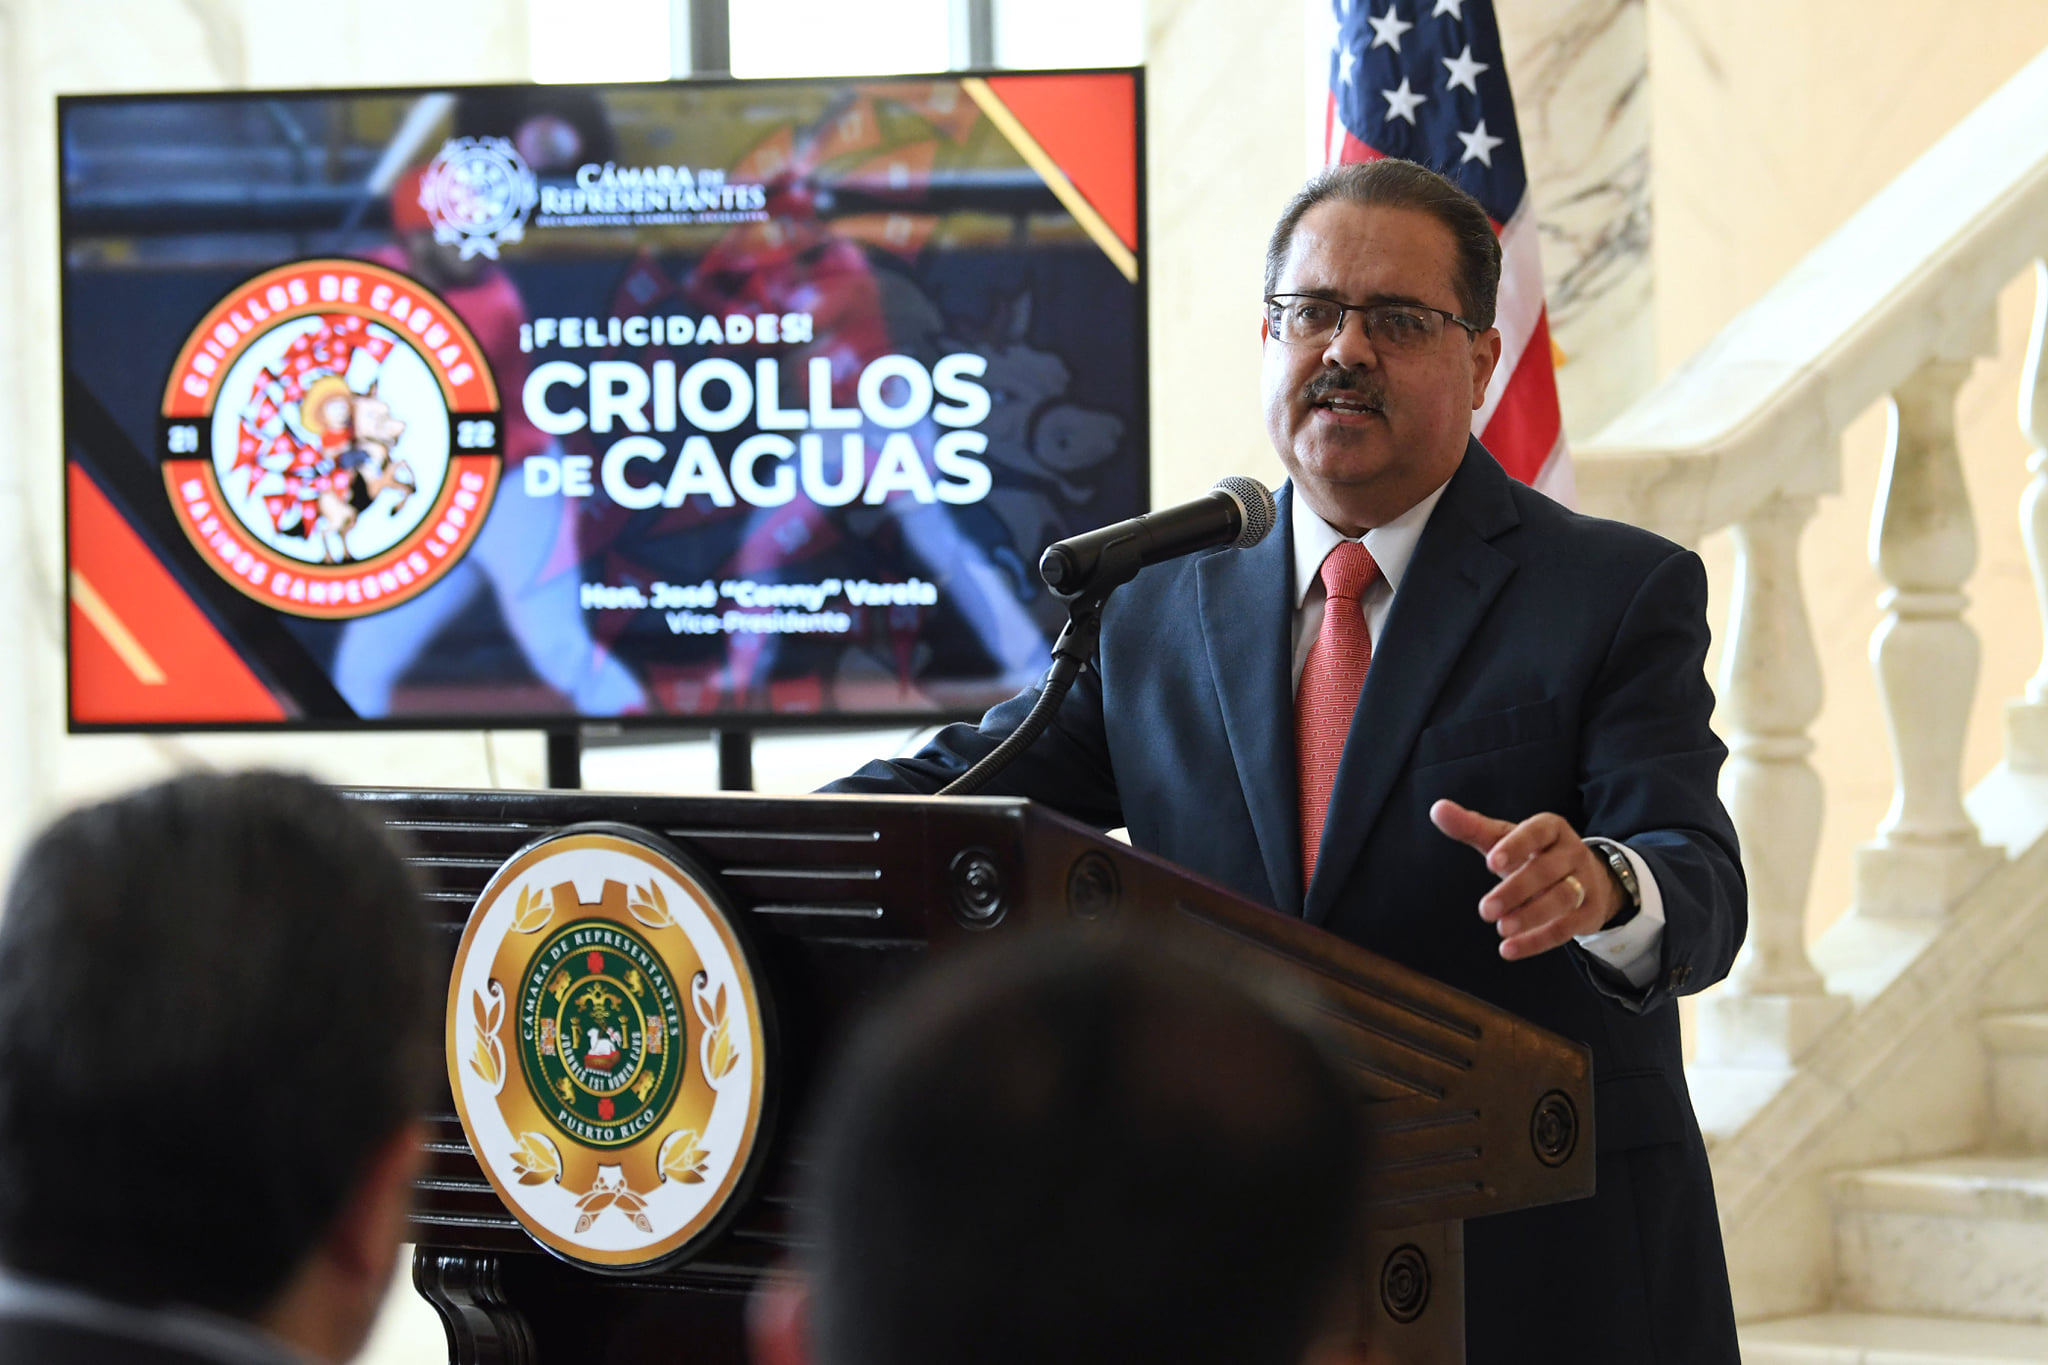 La Asamblea Legislativa le realizó un homenaje a los Criollos de Caguas.